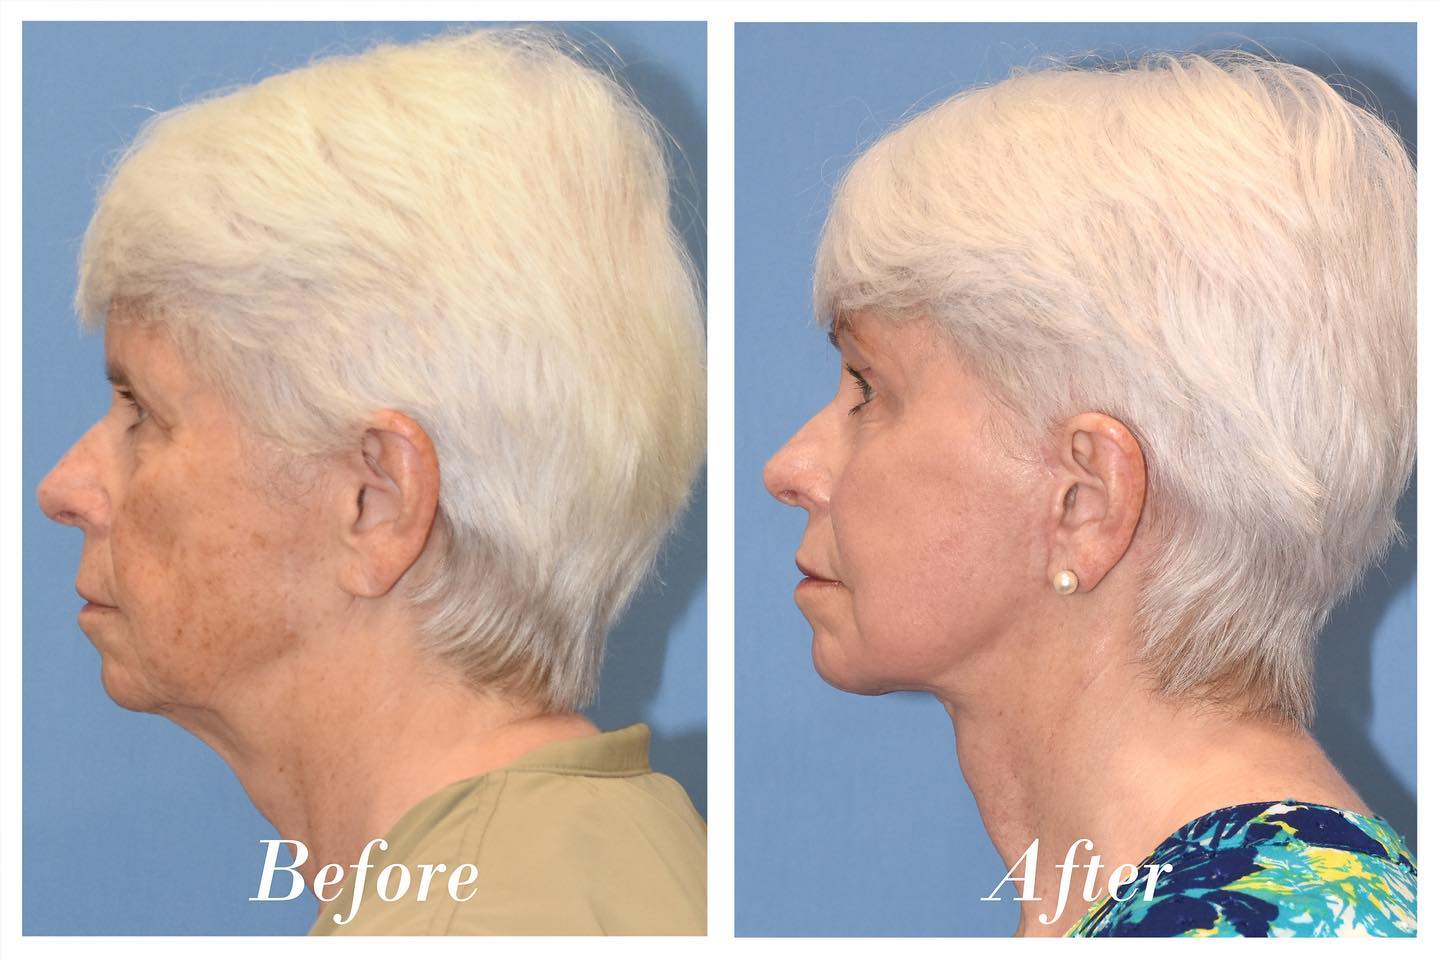 C02 Laser Skin Resurfacing Before & After Image